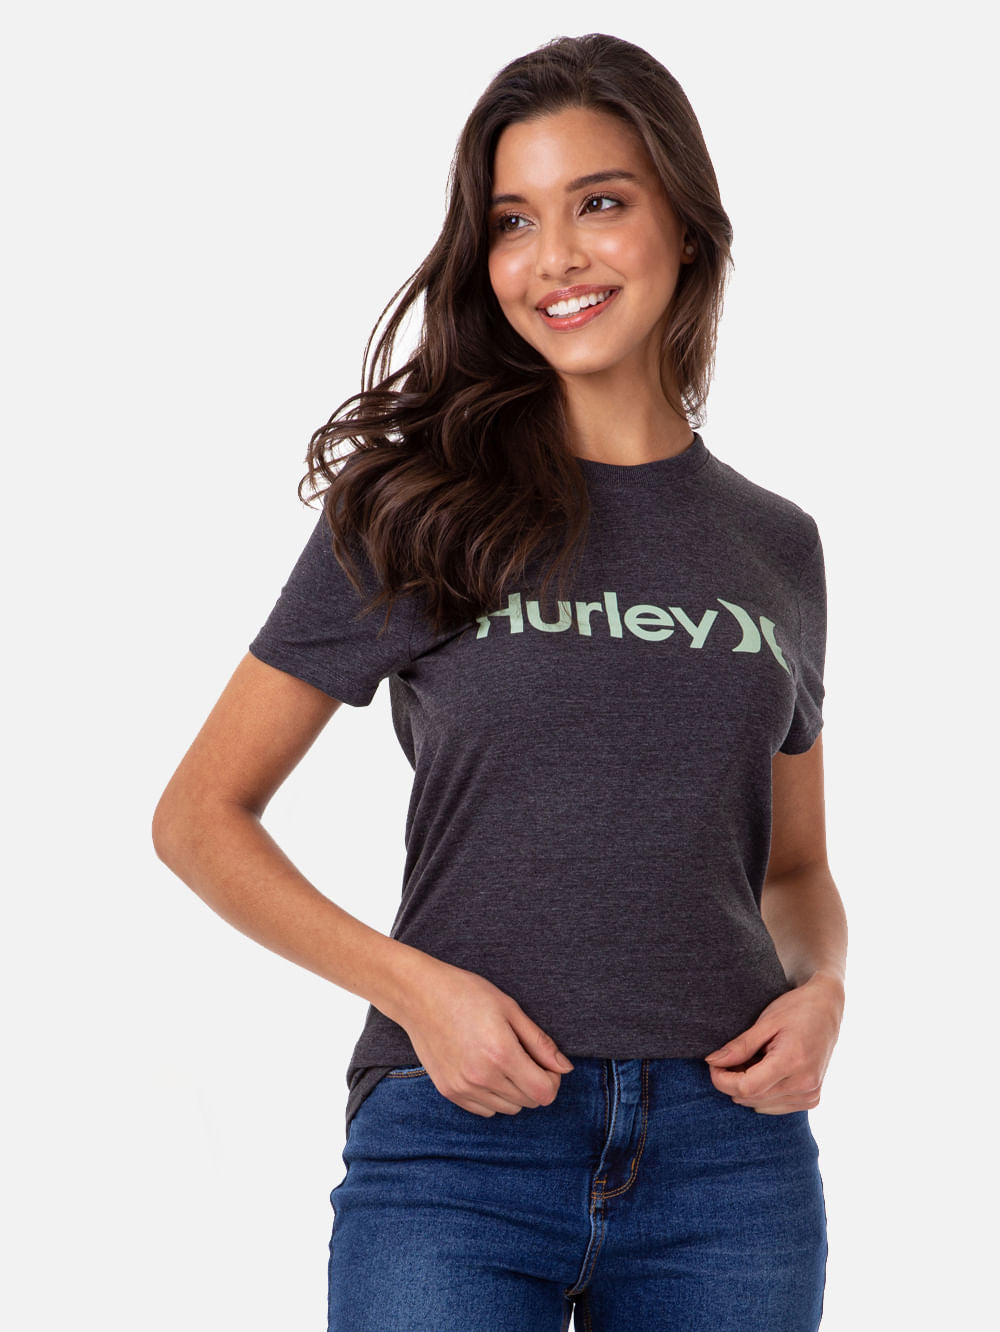 Camiseta Hurley One&Only Mescla Preto